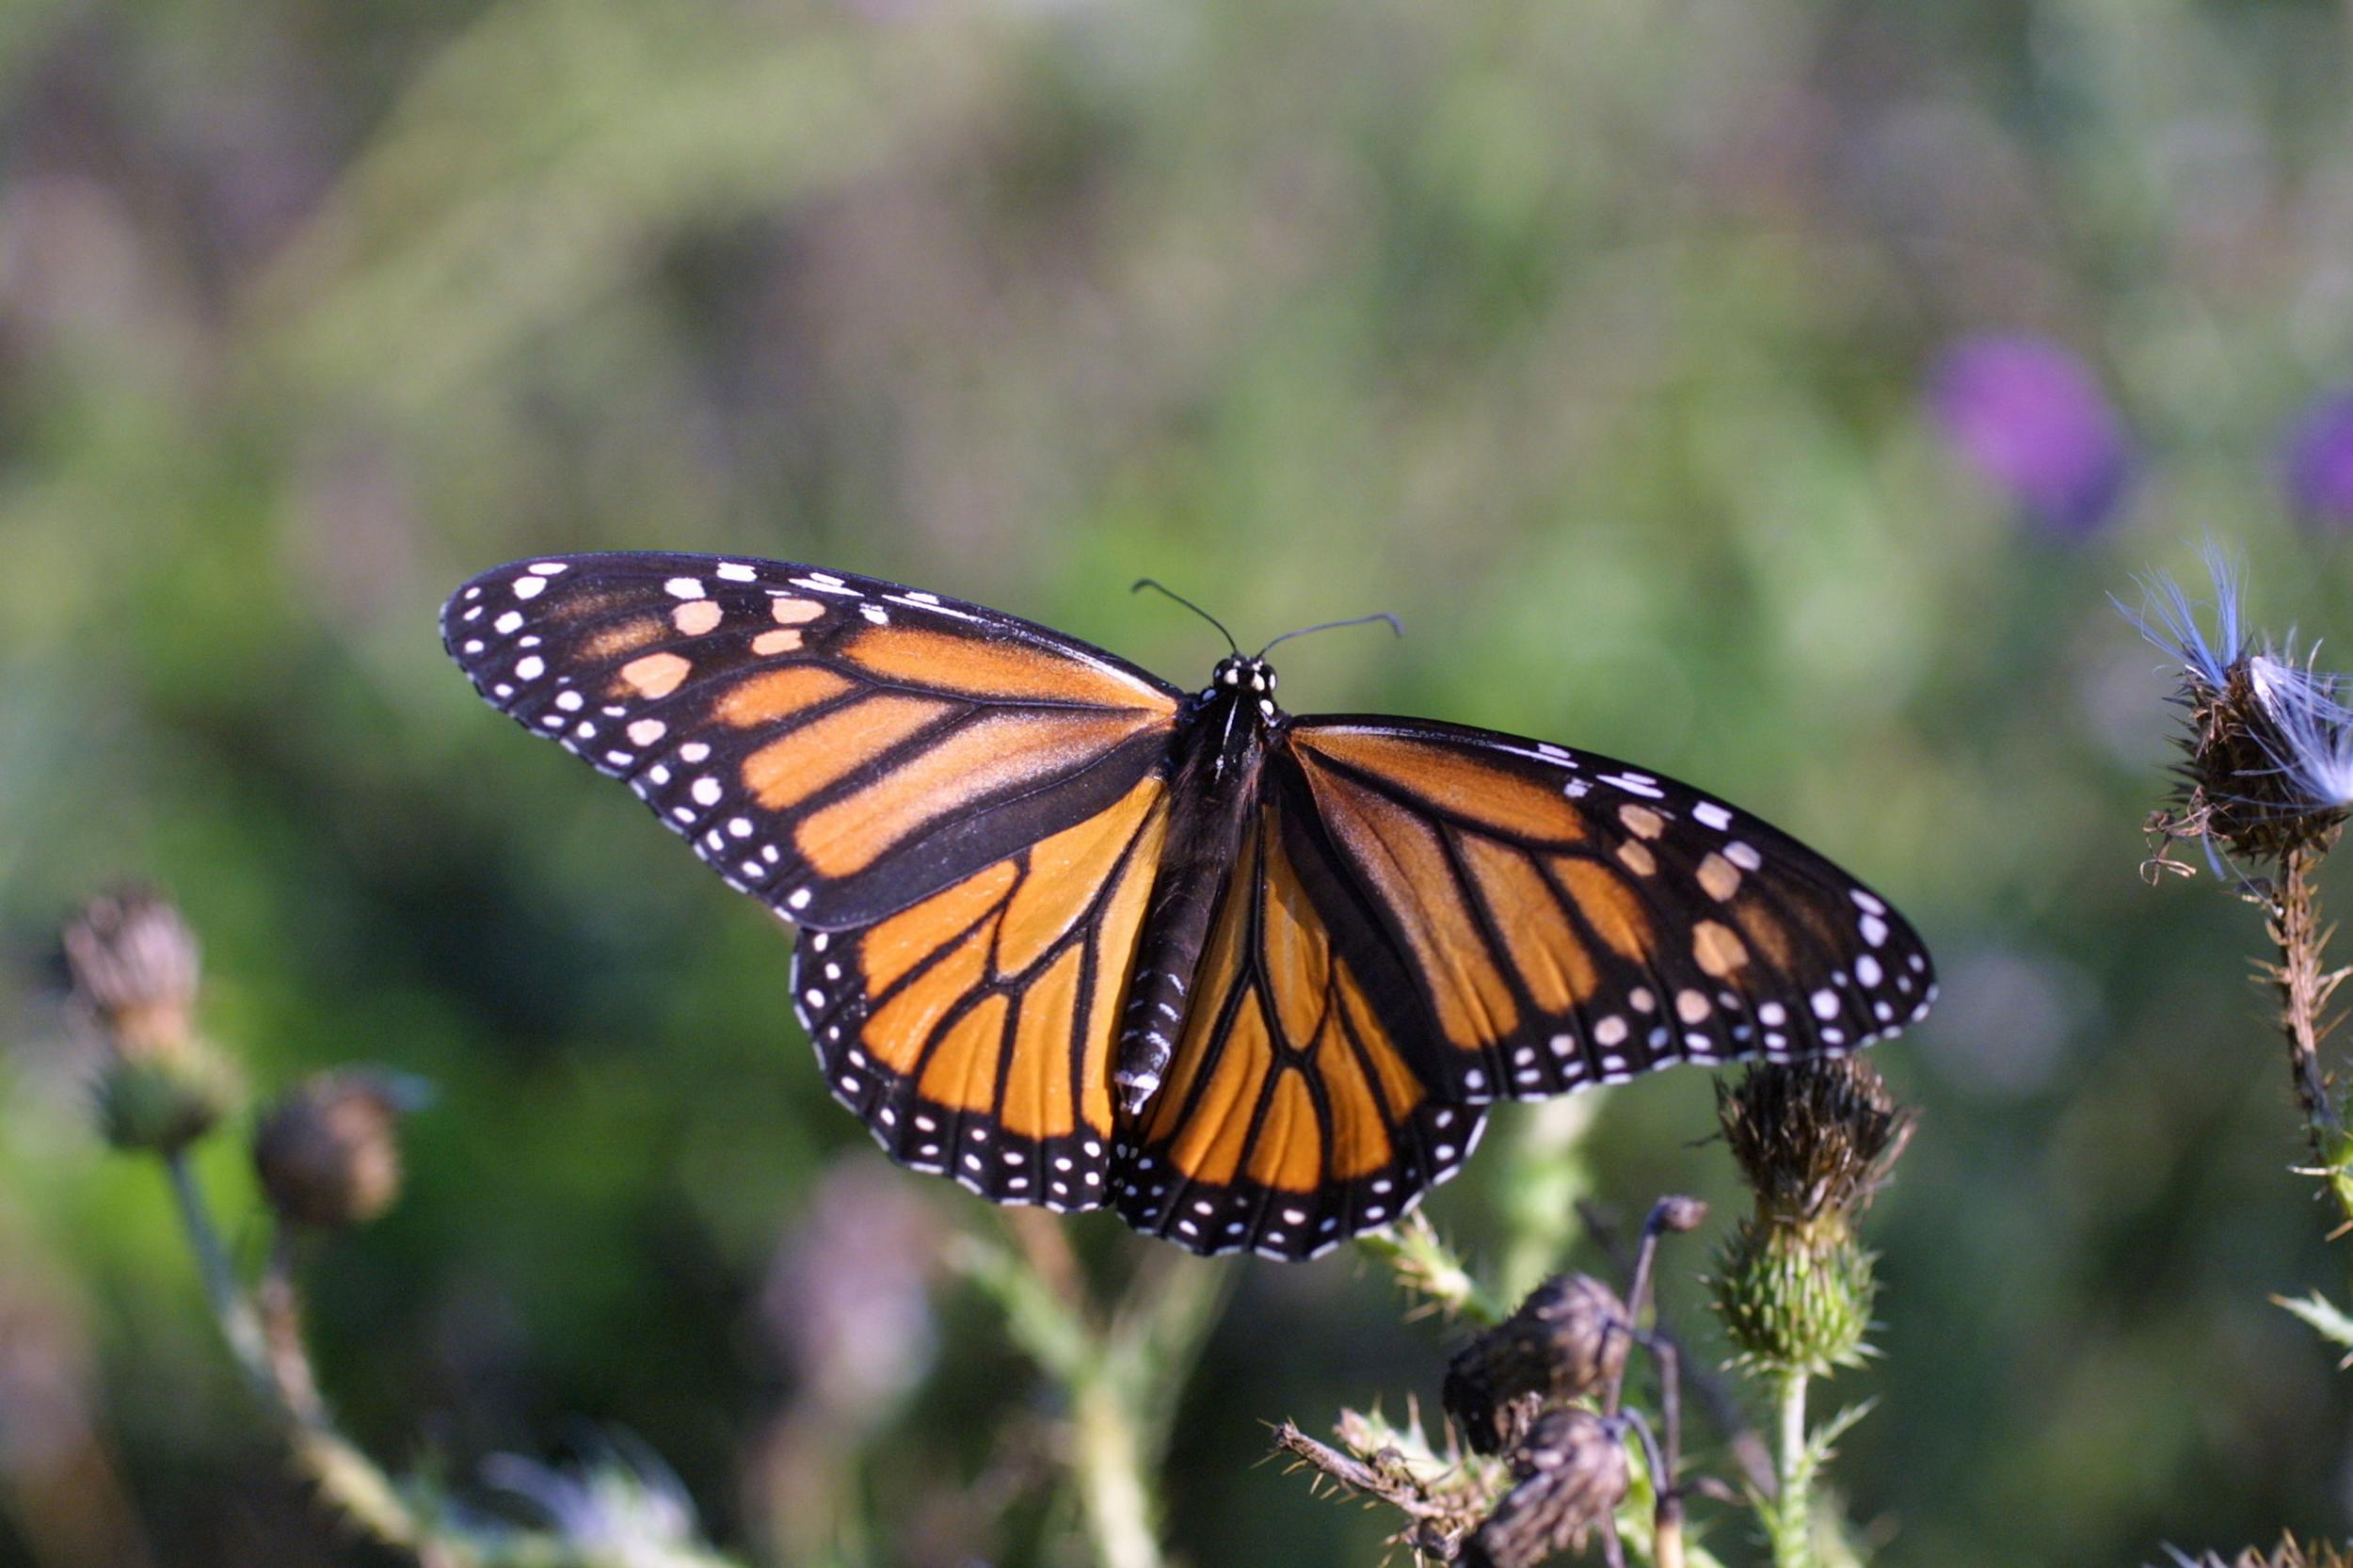 &#13;
Wild monarchs were fitter and more successful migrators &#13;